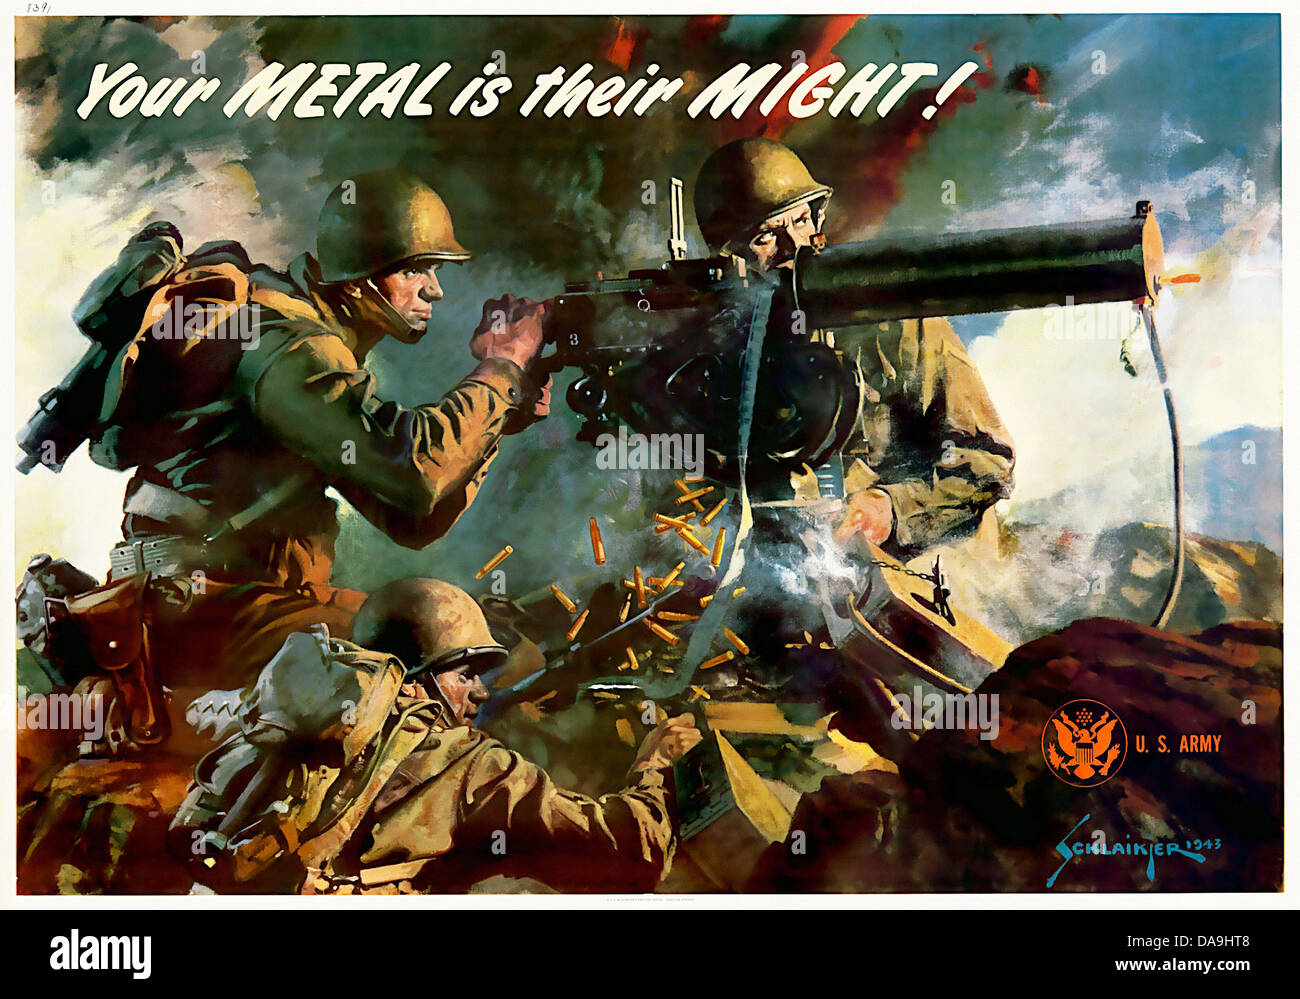 Zweiter Weltkrieg, Zweiter Weltkrieg, Weltkrieg, Krieg, Poster, Propagana, Propaganda Poster, USA, American, Machine gun, Soldat, Metall Stockfoto